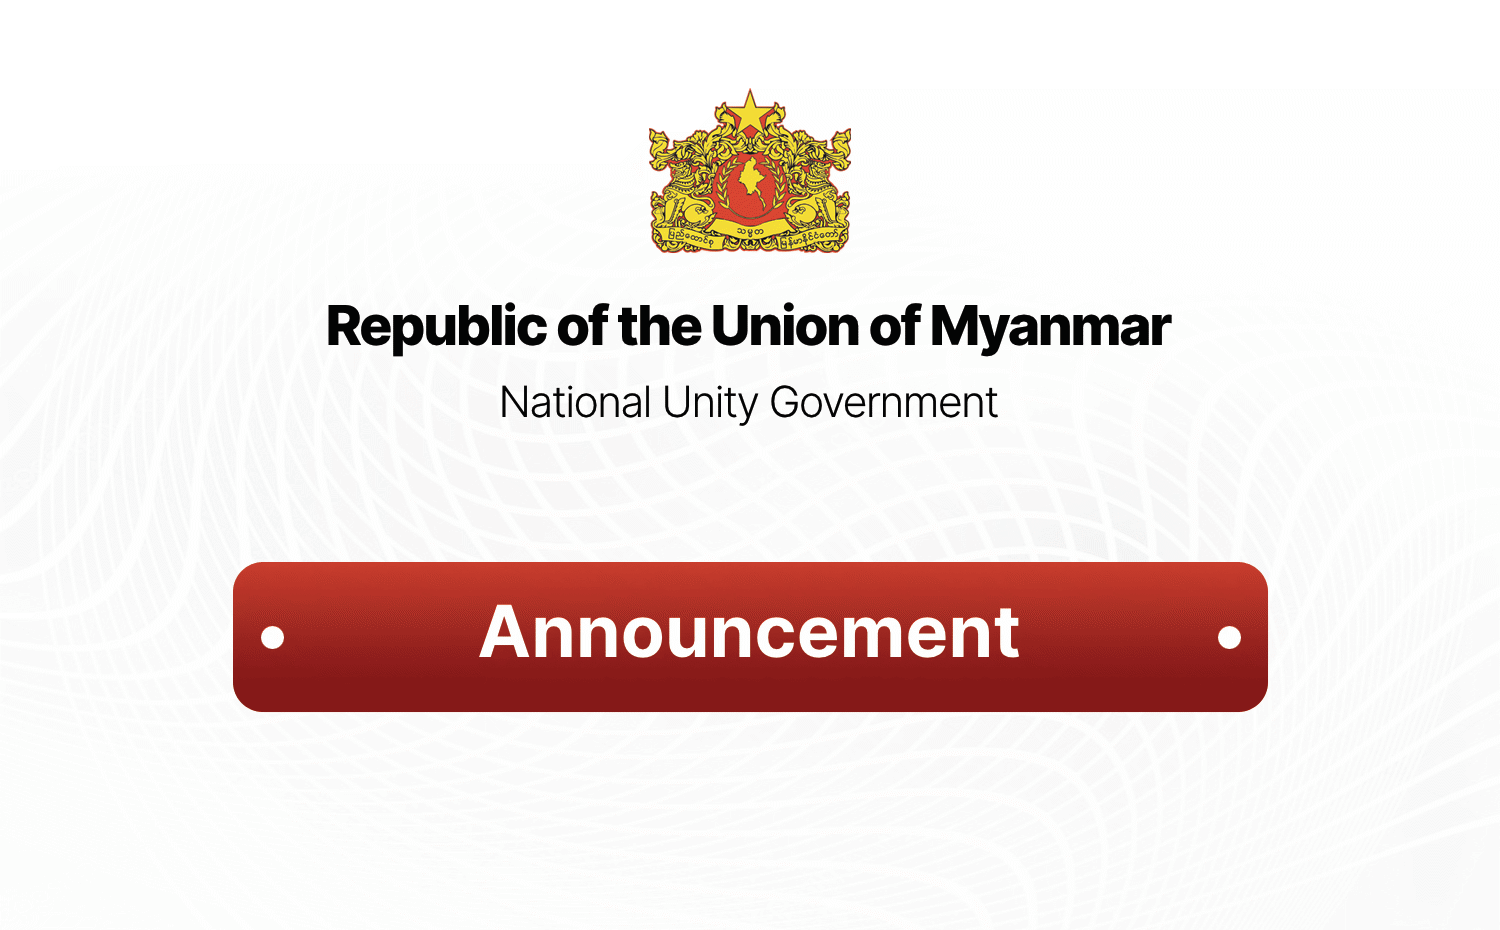 “Announcement on Counter Terrorism and Designation of Terrorist Organizations”